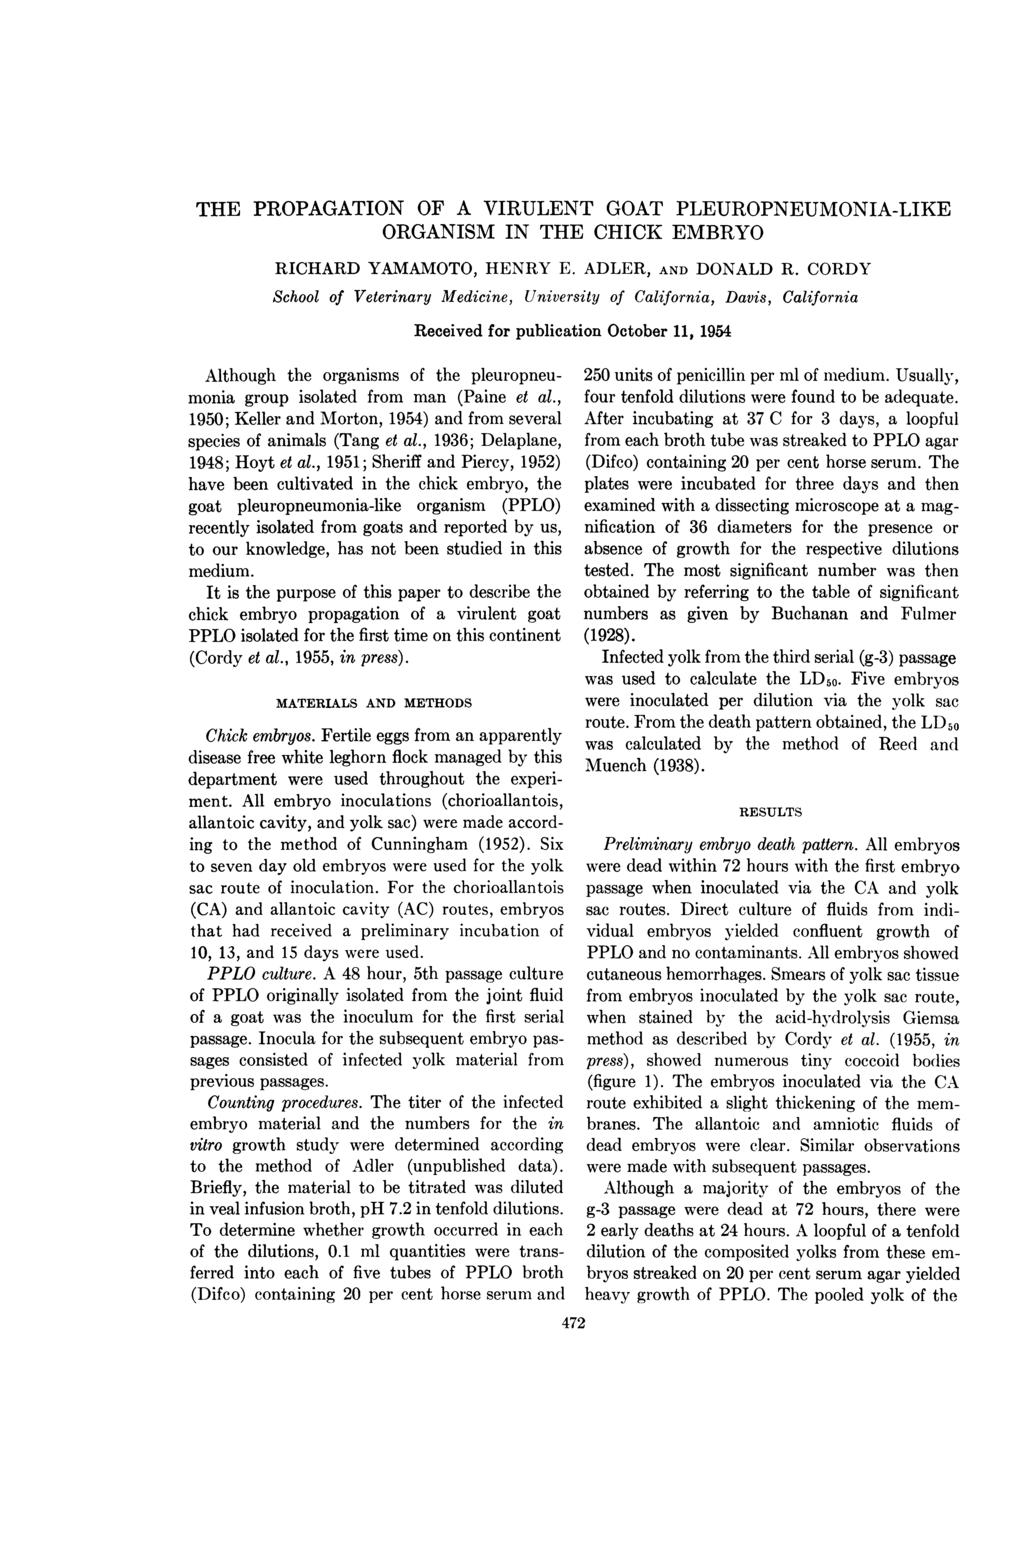 THE PROPAGATION OF A VIRULENT GOAT PLEUROPNEUMONIA-LIKE ORGANISM IN THE CHICK EMBRYO RICHARD YAMAMOTO, HENRY E. ADLER, AND DONALD R.